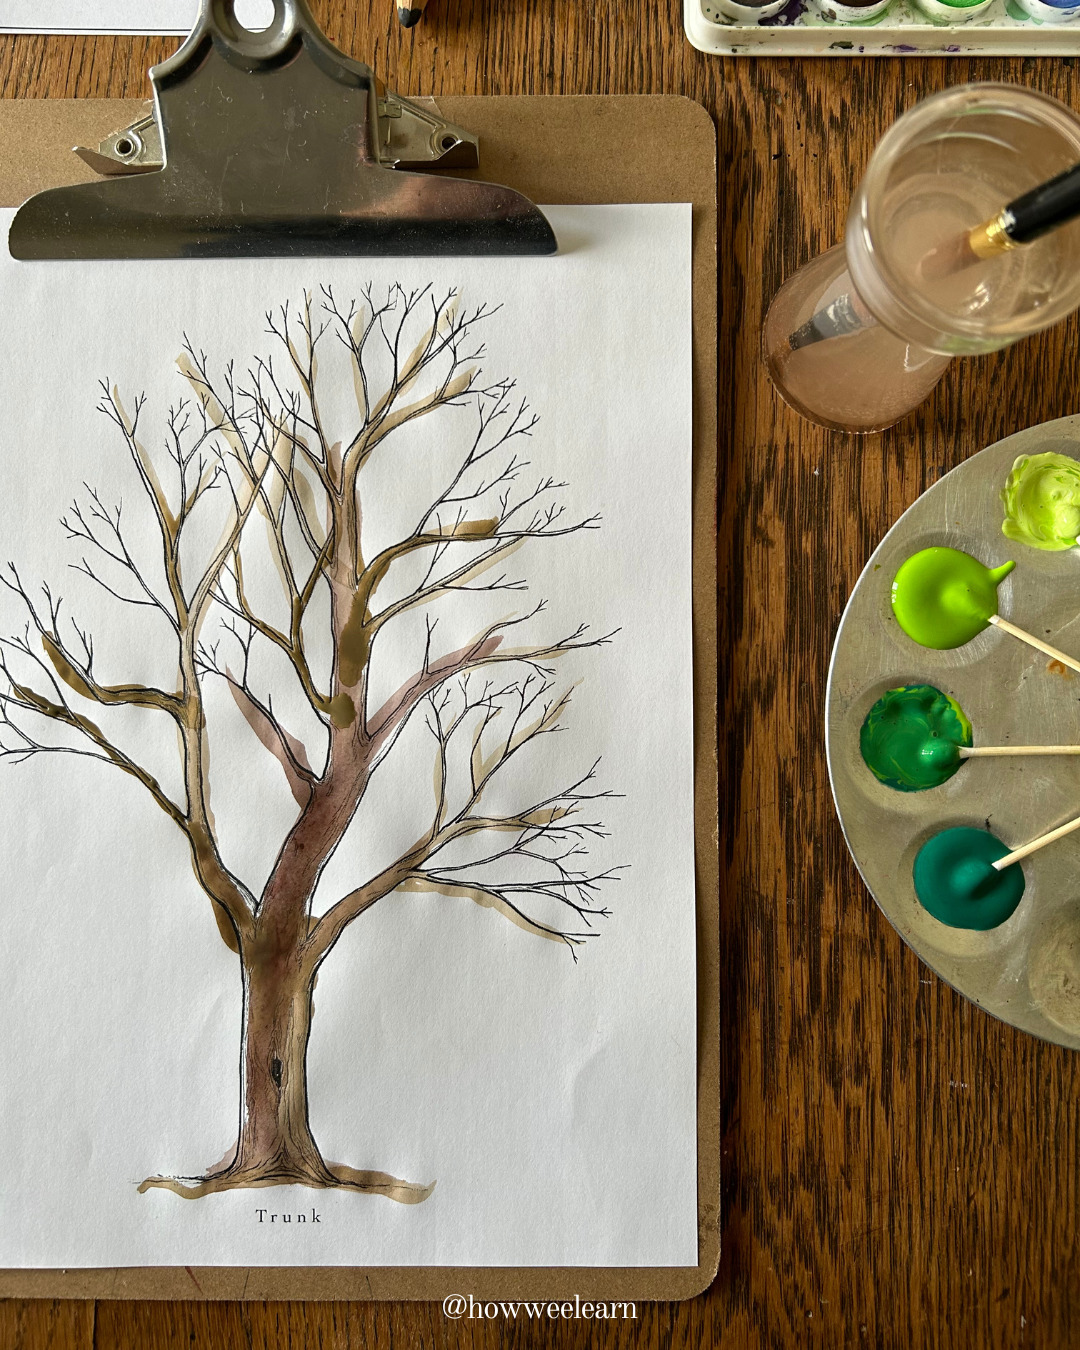 Four Season Craft Sensory Tree - Summer Green Paint